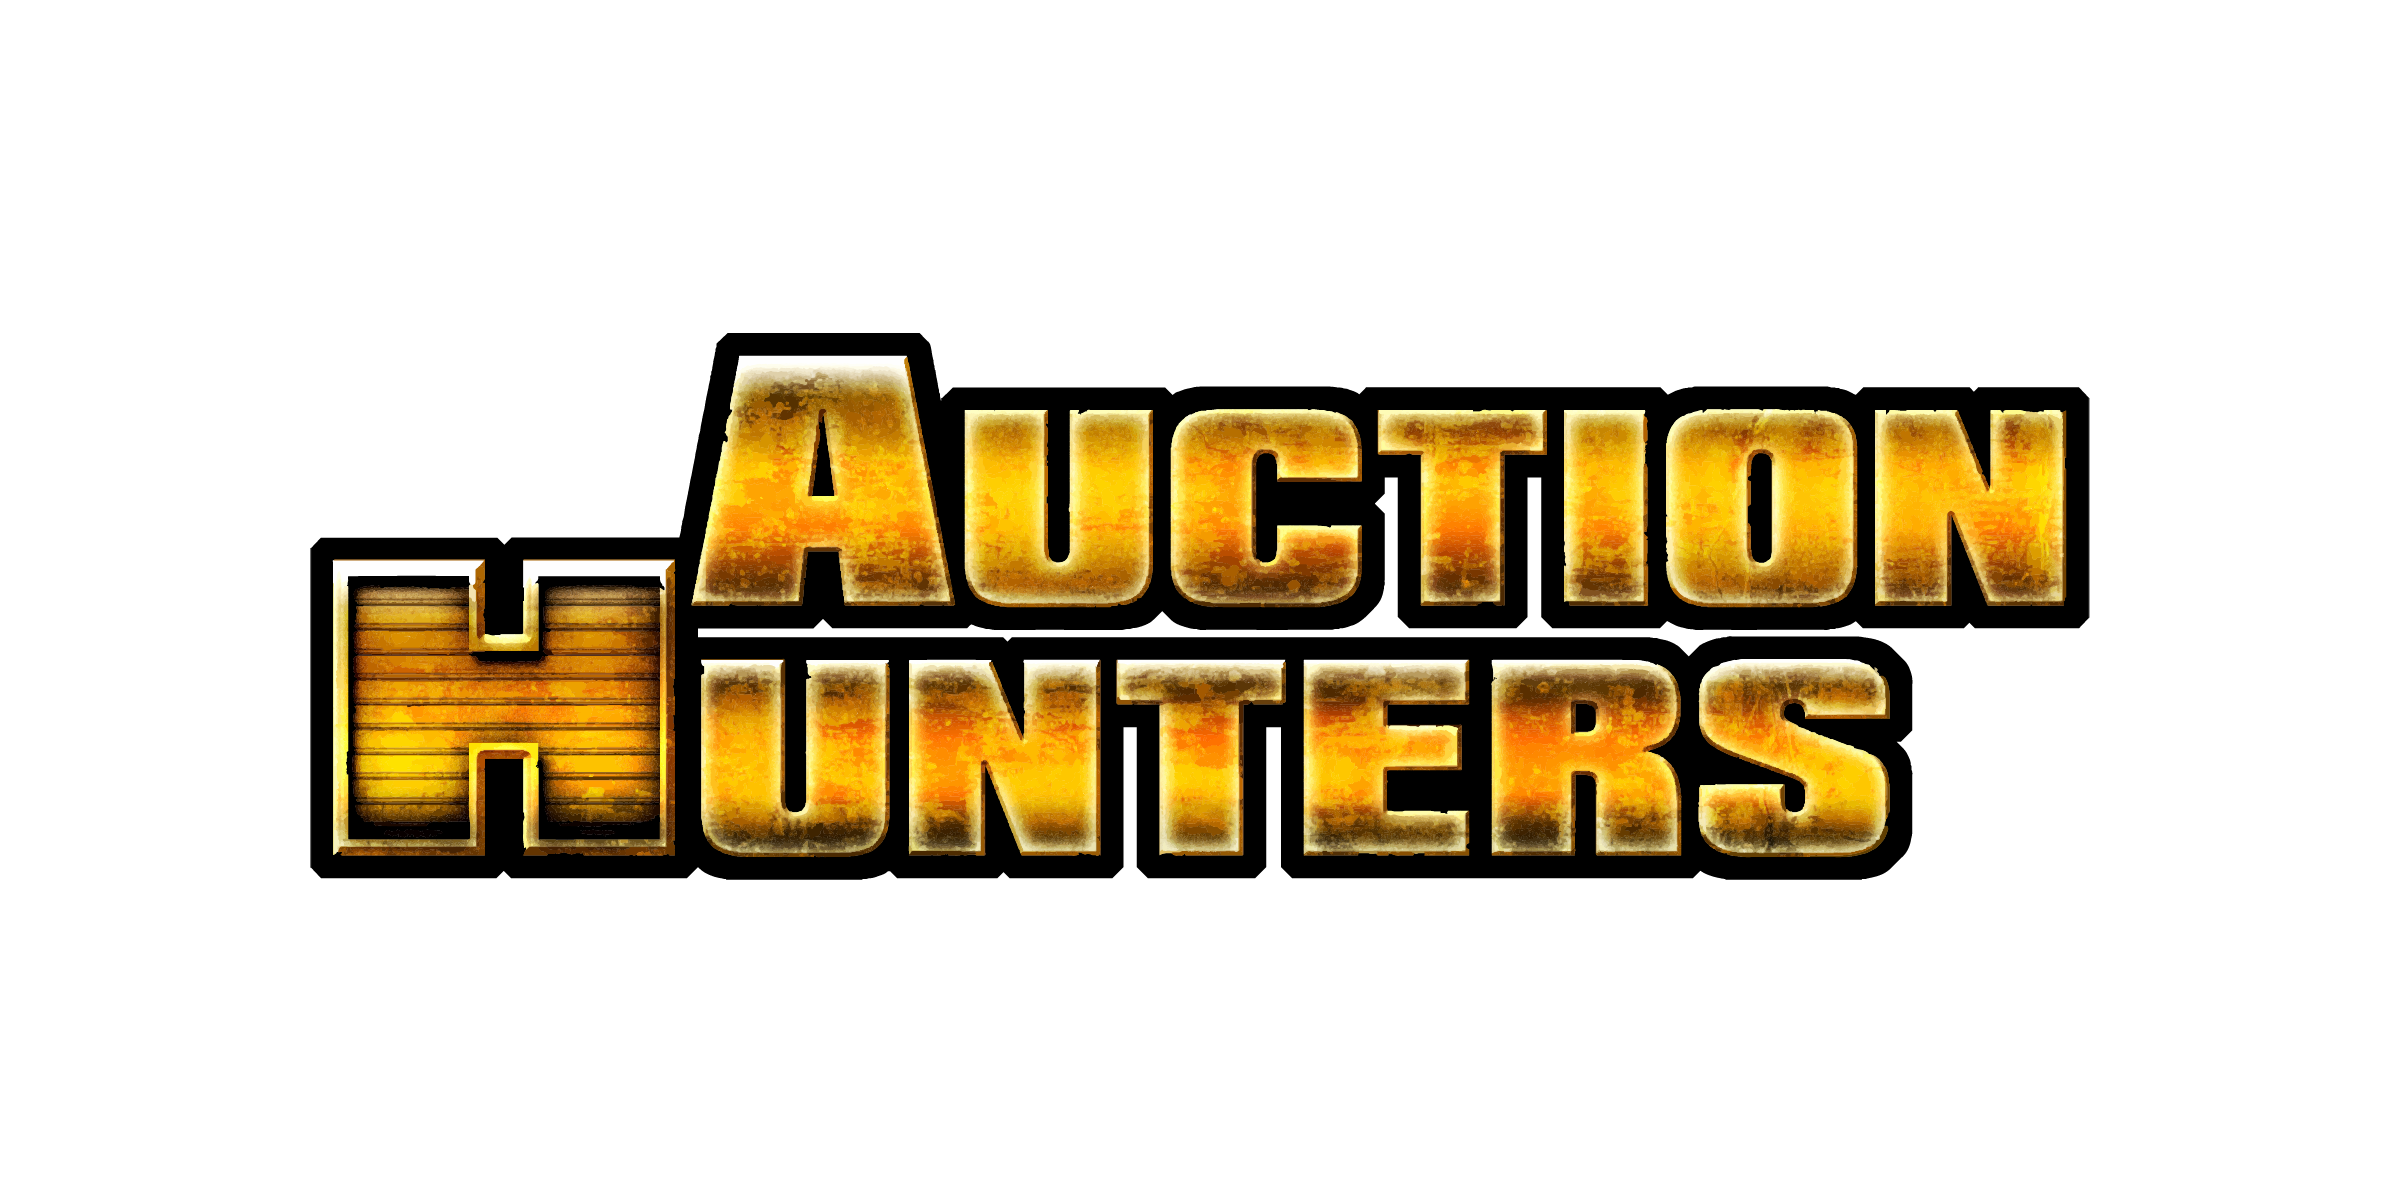 Pluto TV Auction Hunters